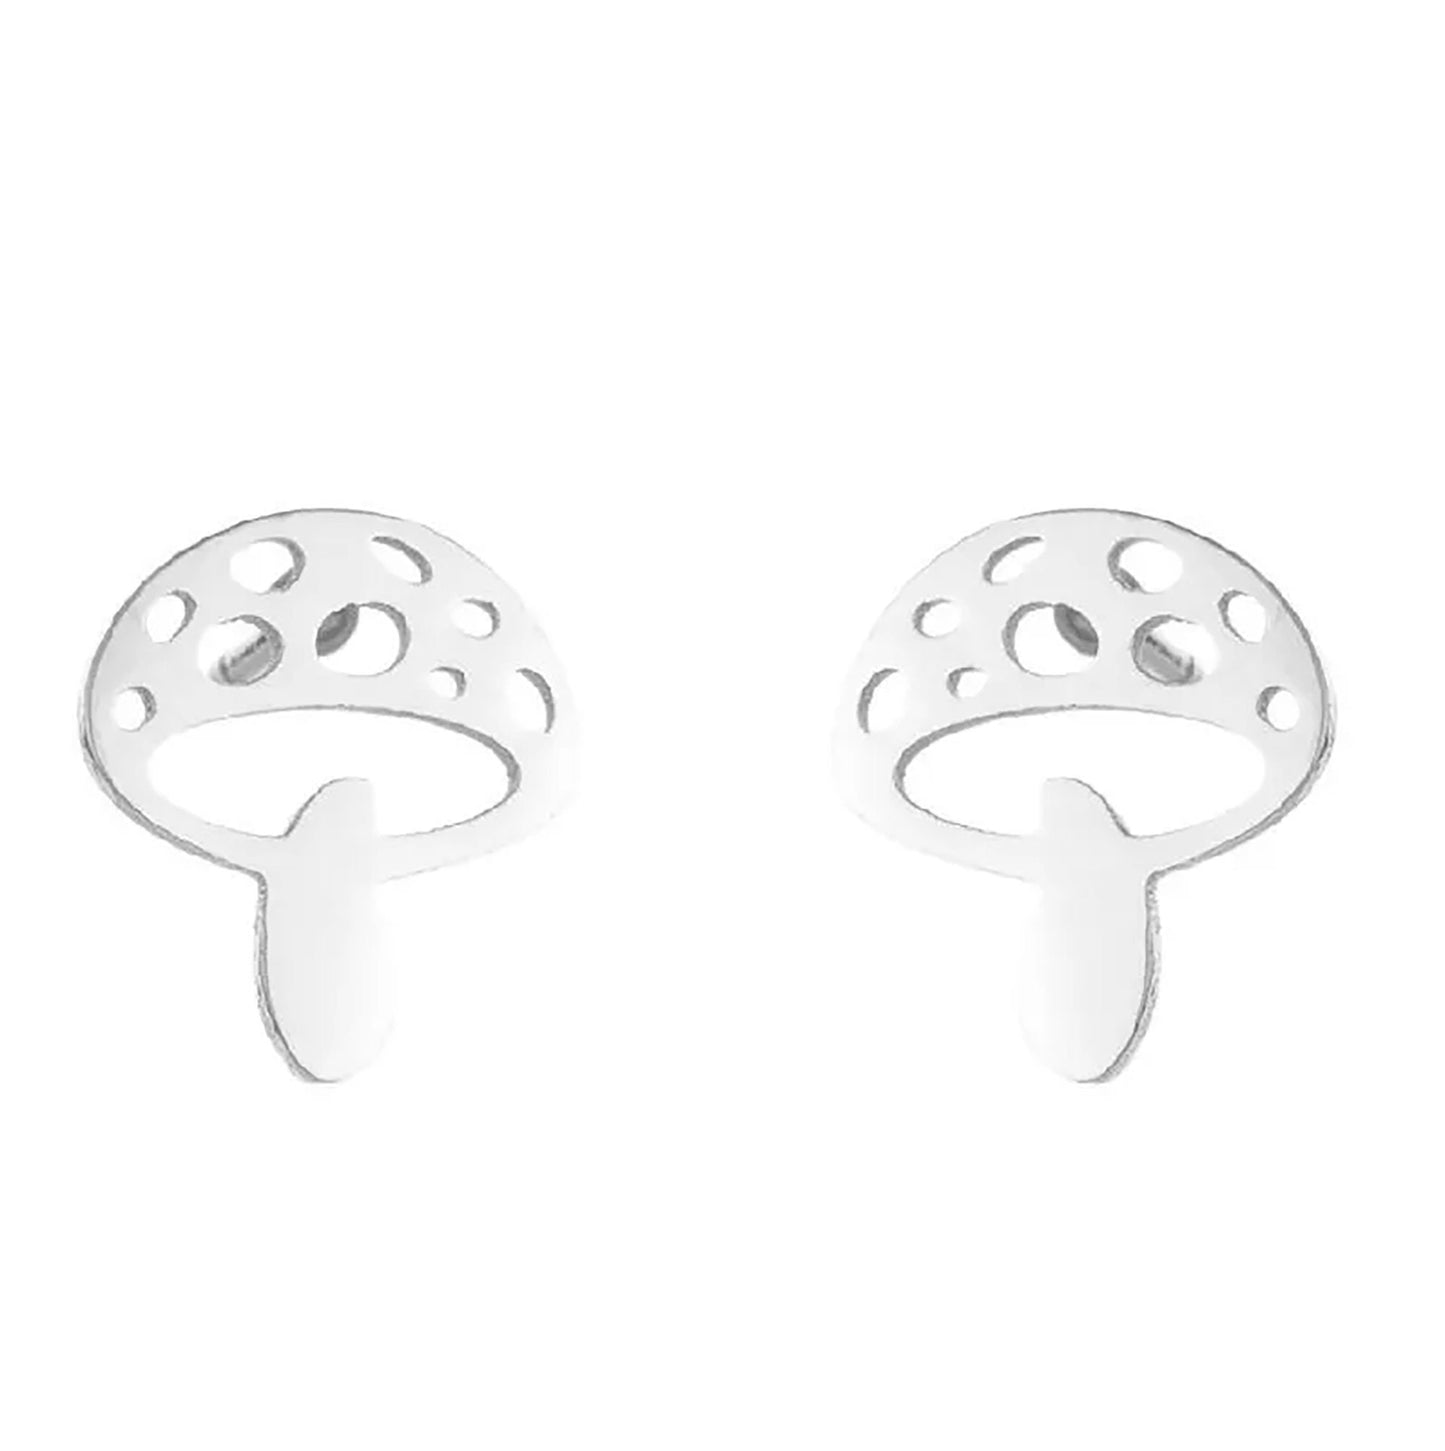 Titanium Mushroom Earrings, Non Tarnish Earrings, Implant Grade Titanium Waterproof Earrings, Vintage Style Earrings, Minimal Earrings